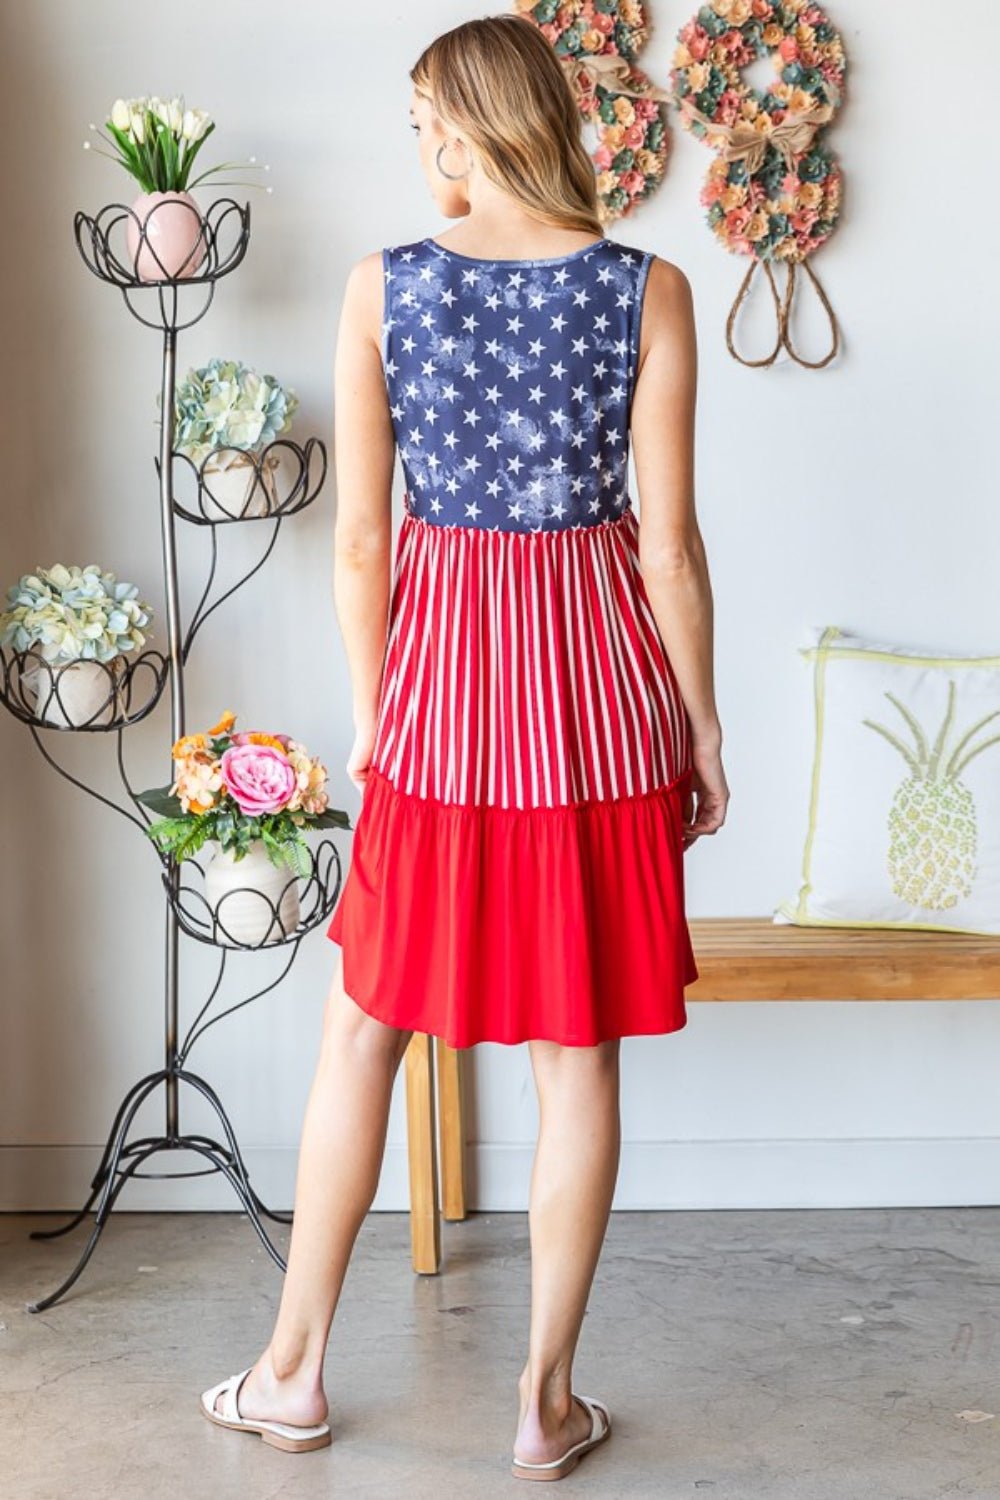 Heimish Full Size US Flag Theme Contrast Tank Dress - OMG! Rose